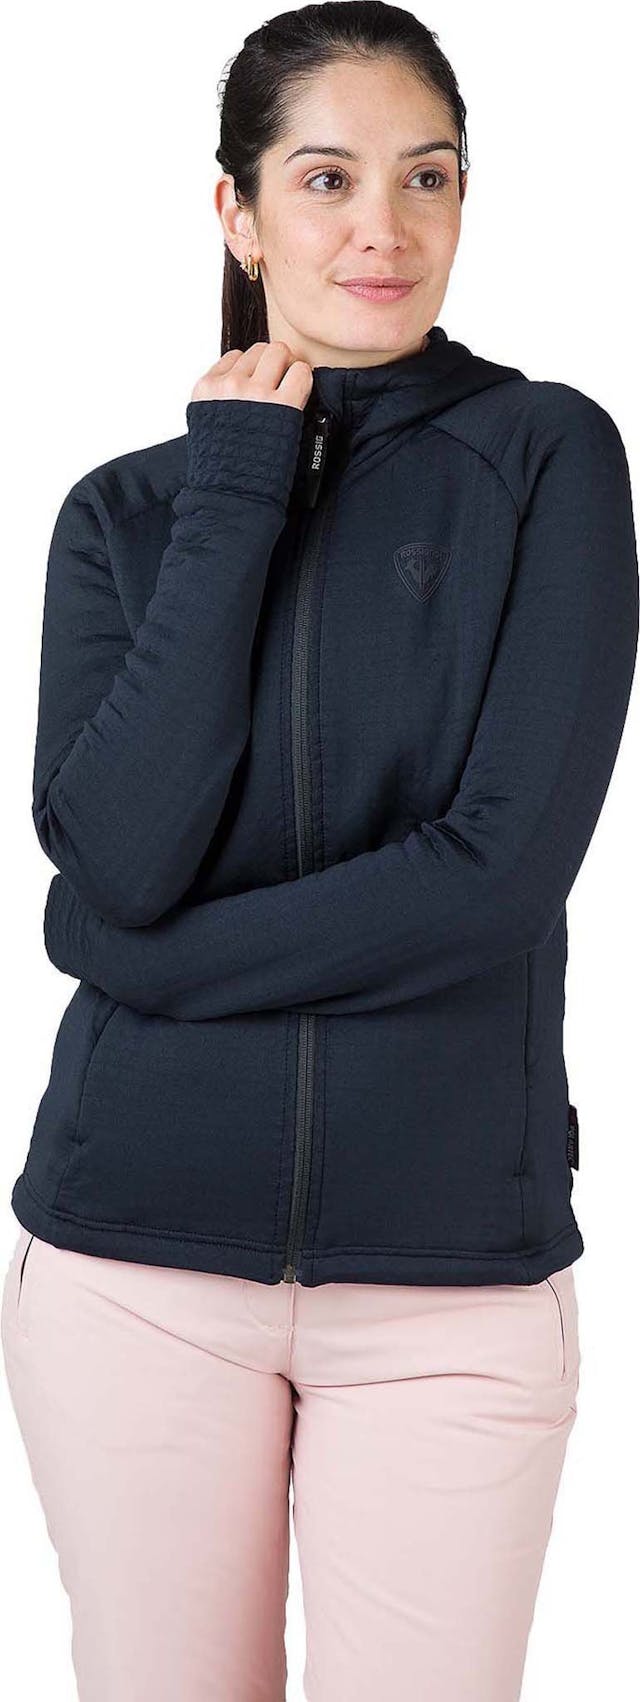 Product image for SKPR Full-Zip Hoodie - Women's